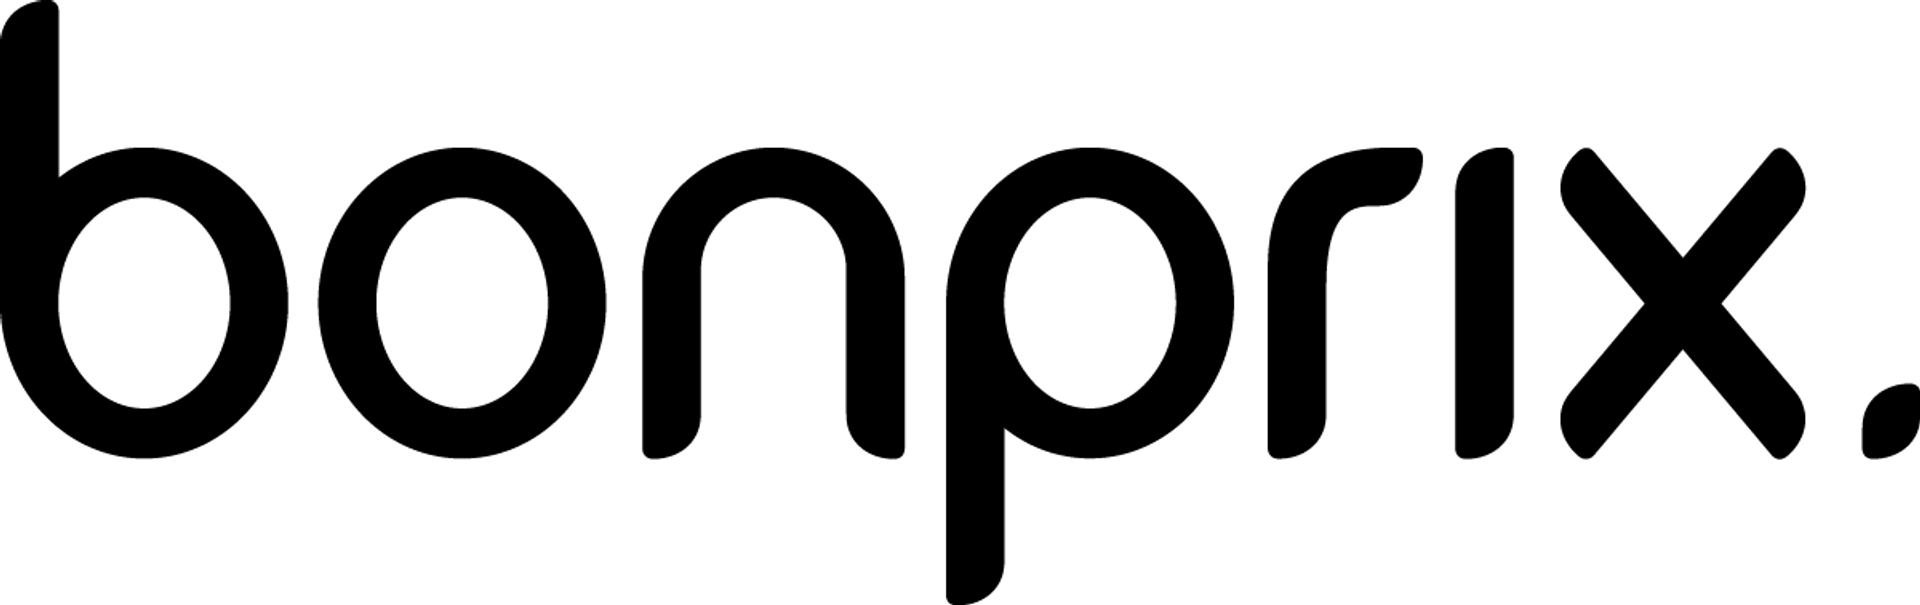 BONPRIX logo die aktuell Flugblatt